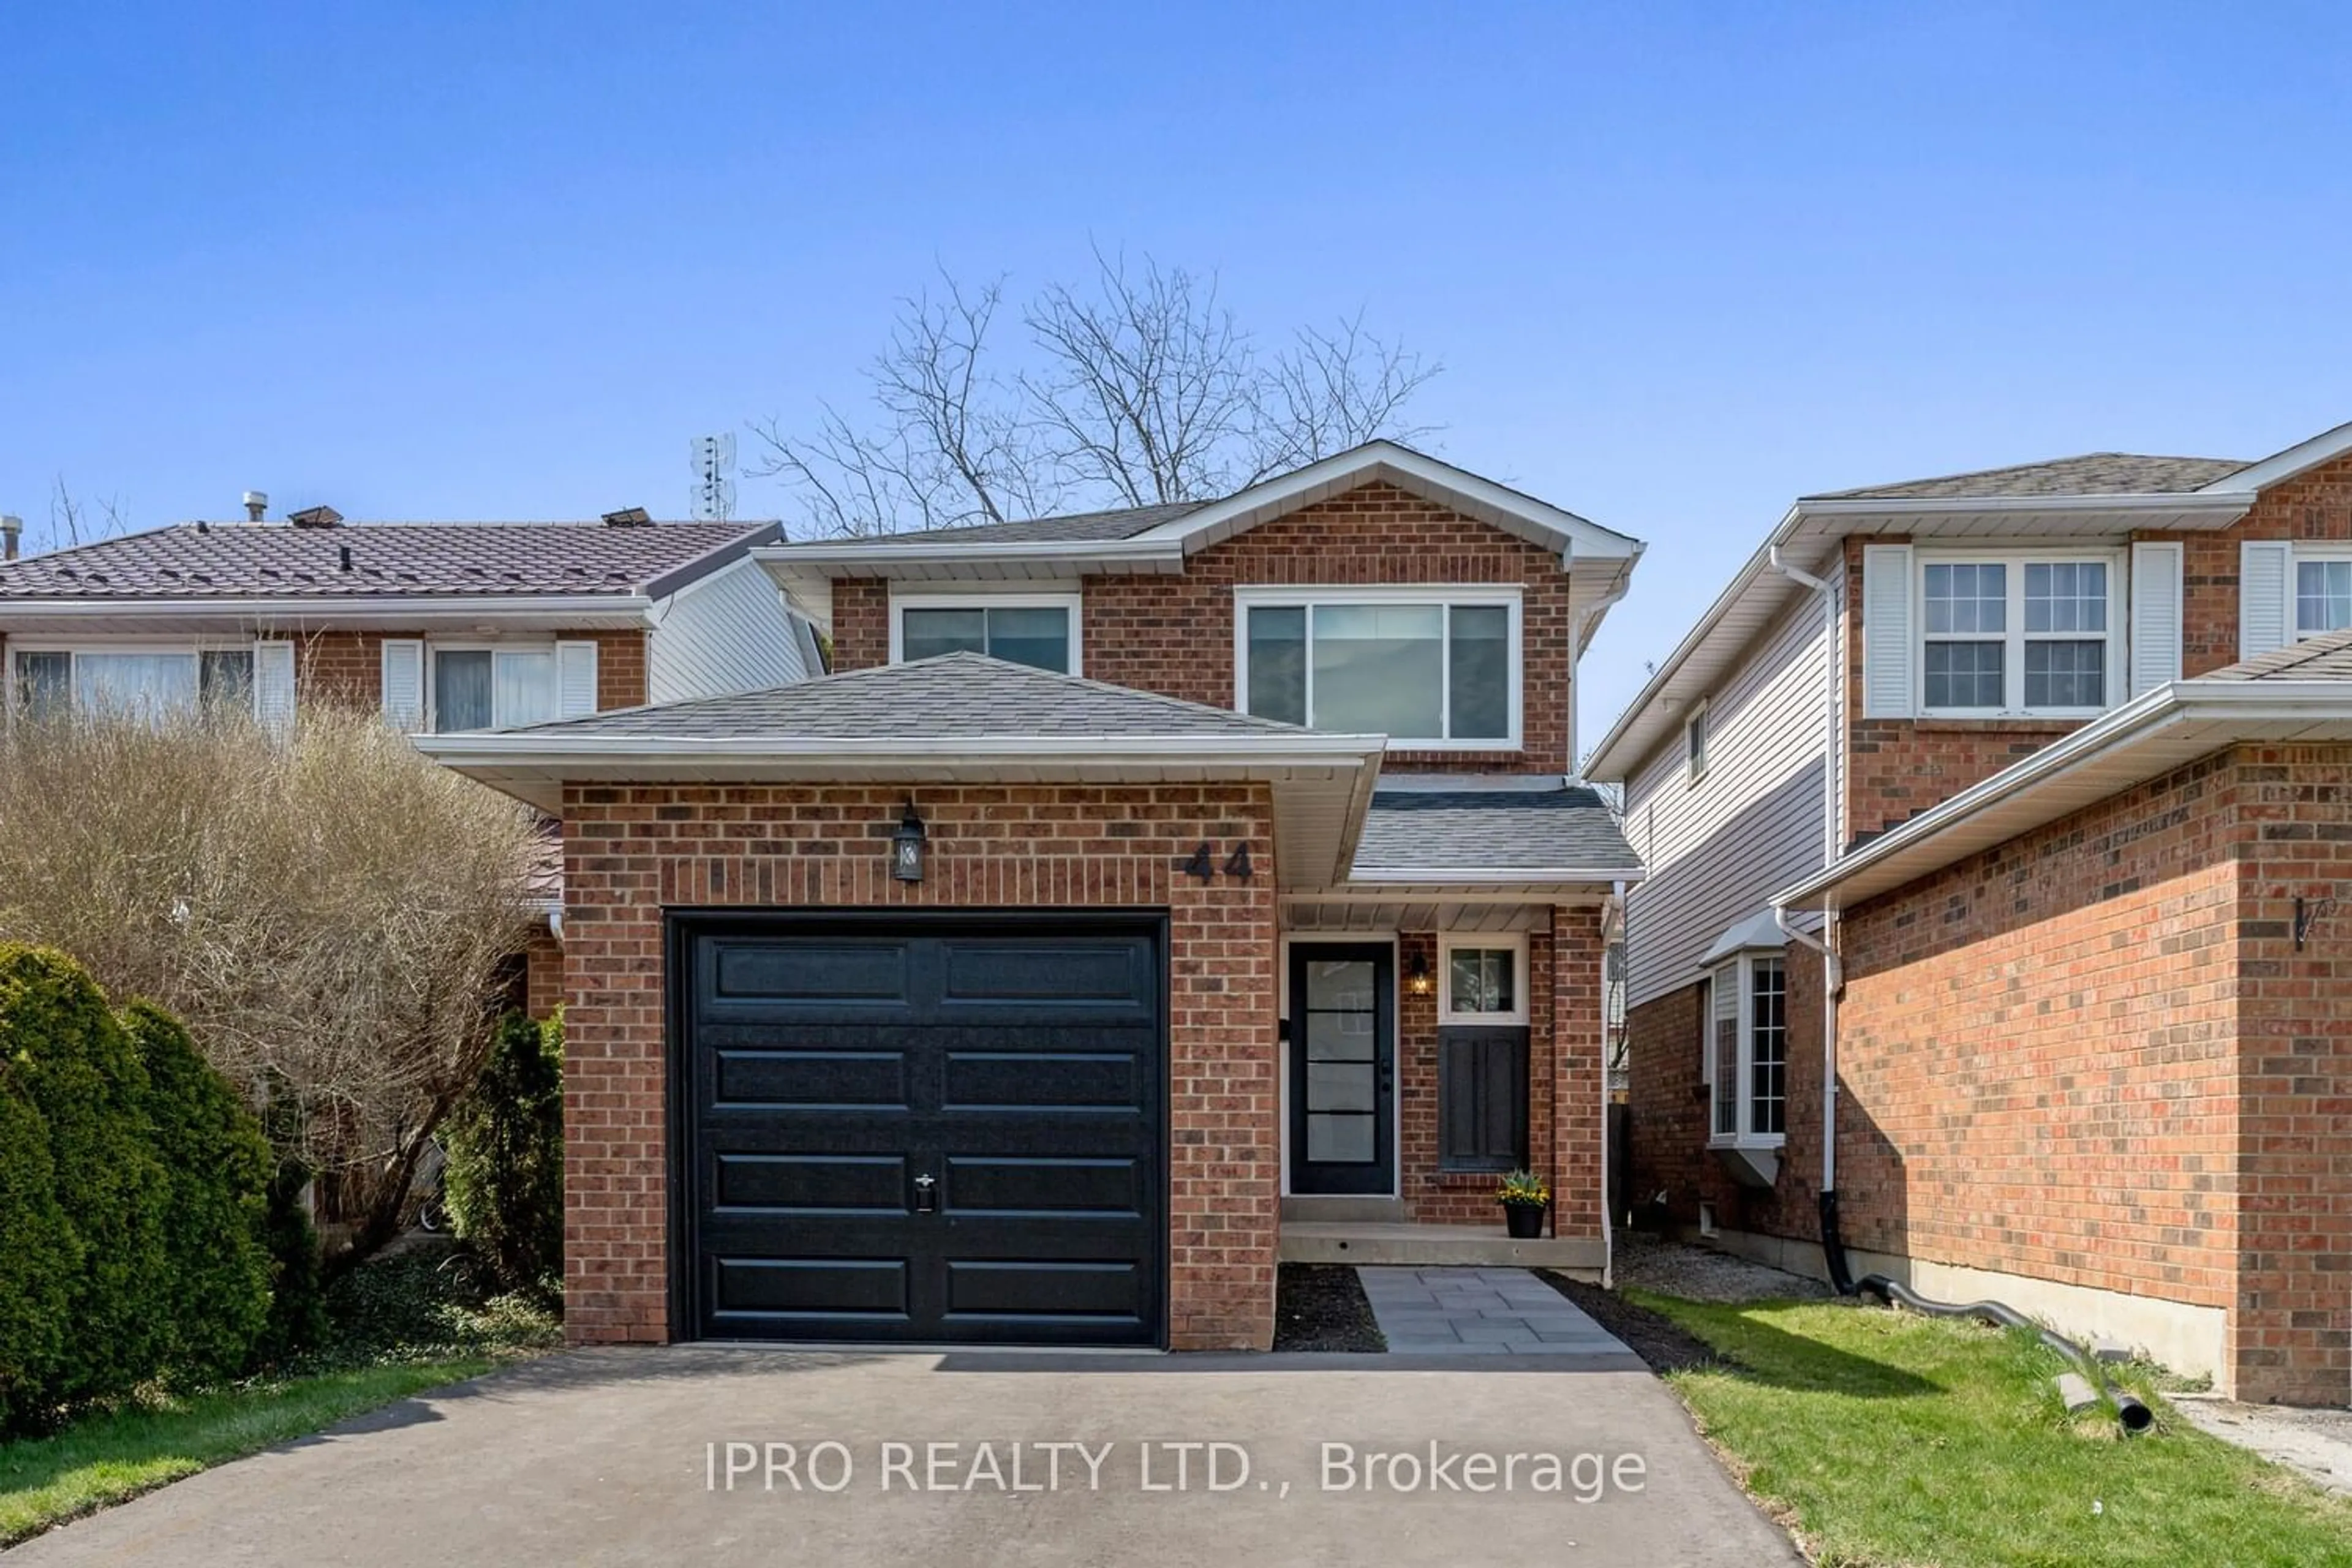 Home with brick exterior material for 44 Weybridge Tr, Brampton Ontario L6V 3Y3